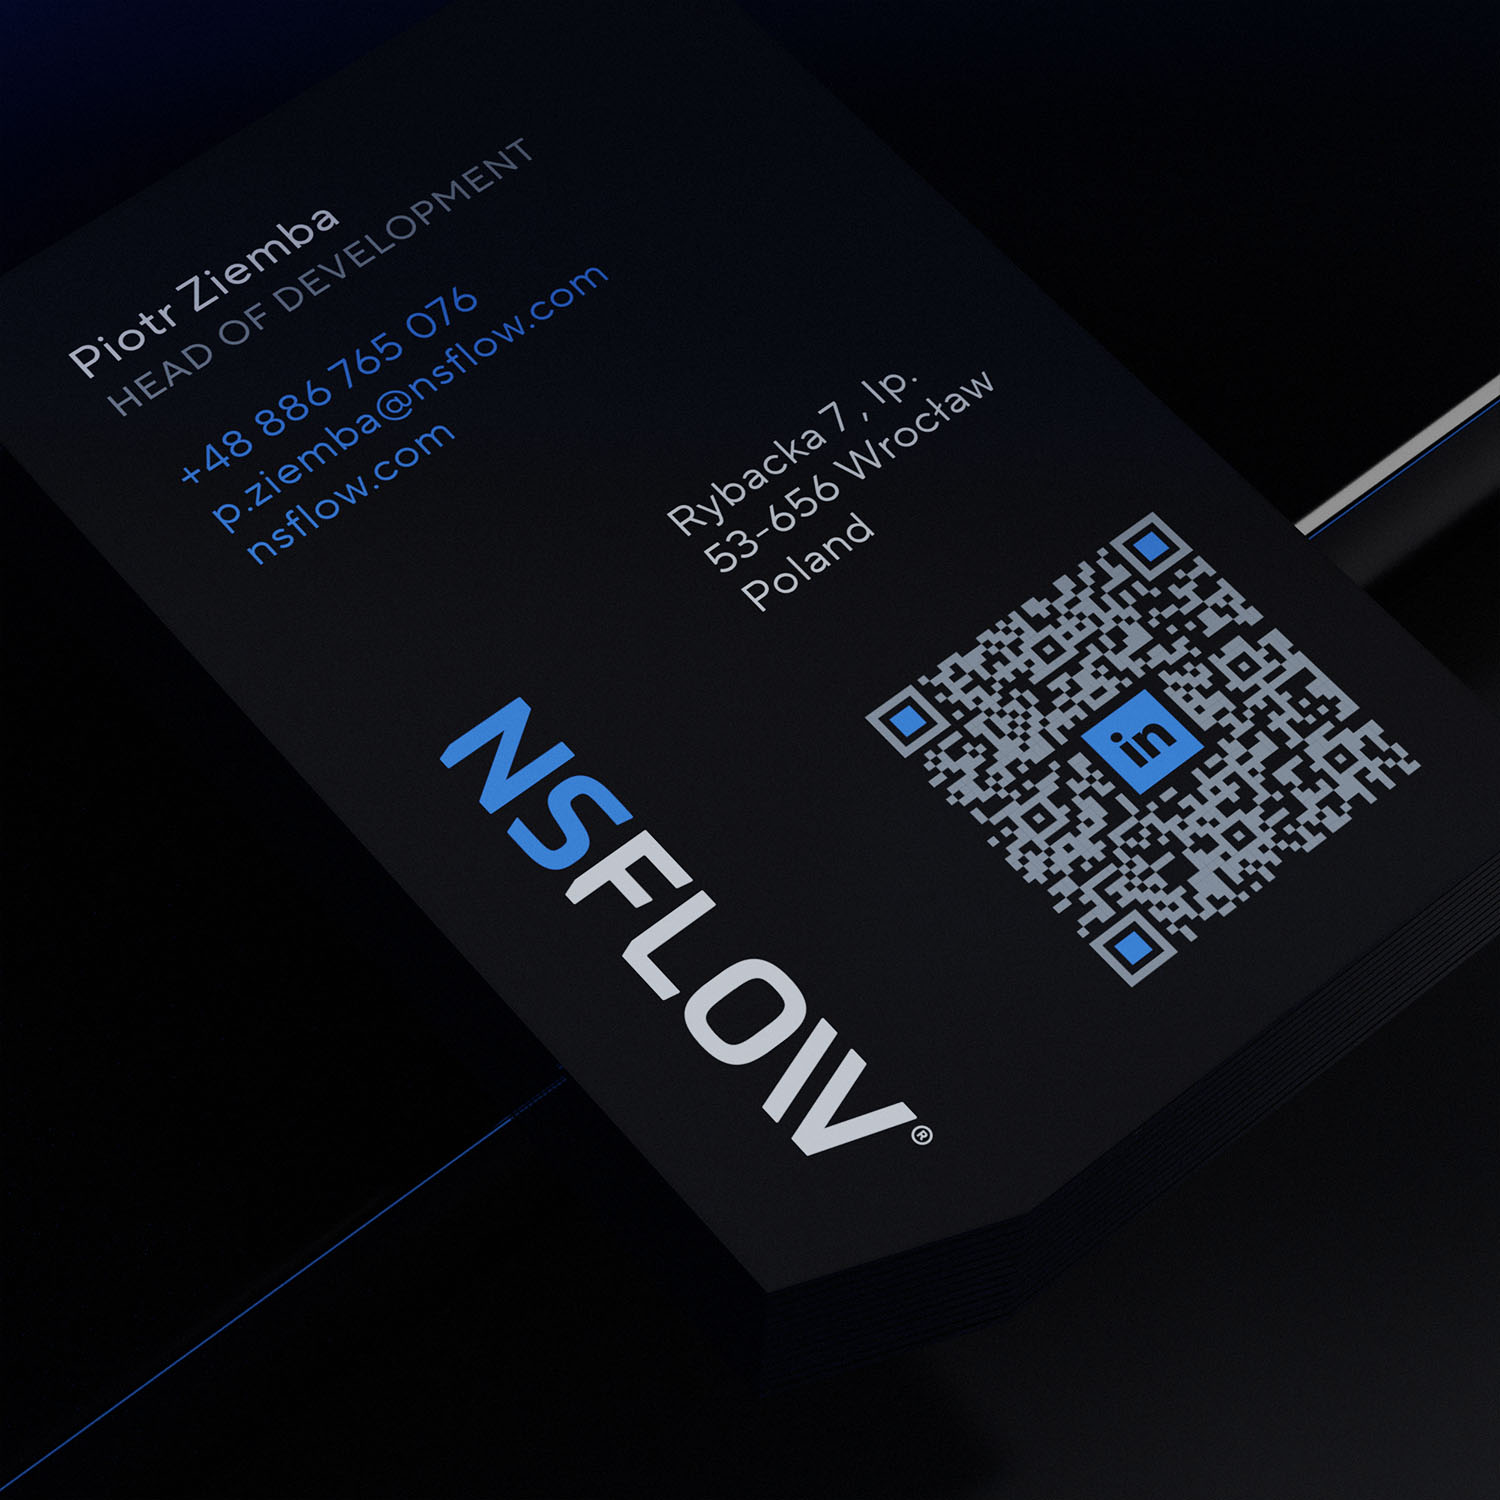 NSFLOW – An industrial AI & AR platform